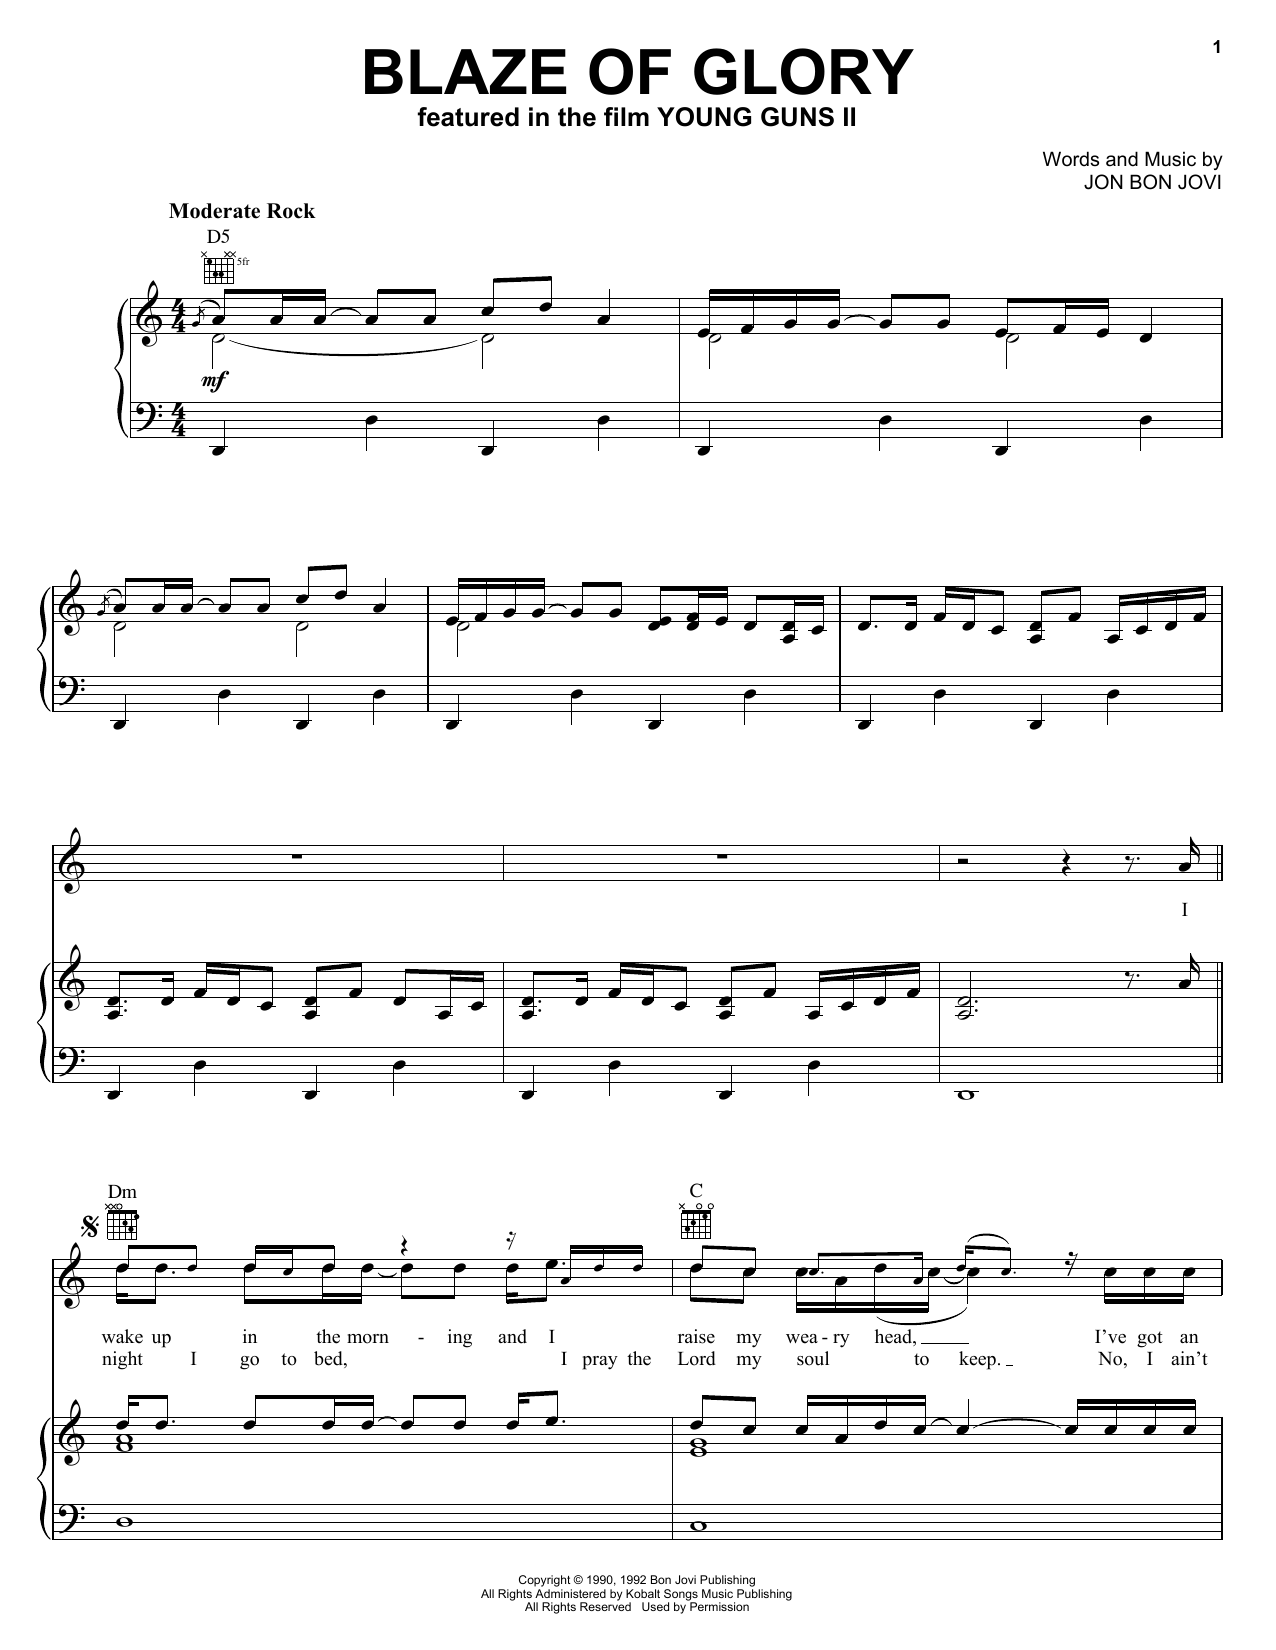 Jon Bon Jovi Blaze Of Glory sheet music notes and chords arranged for Lead Sheet / Fake Book